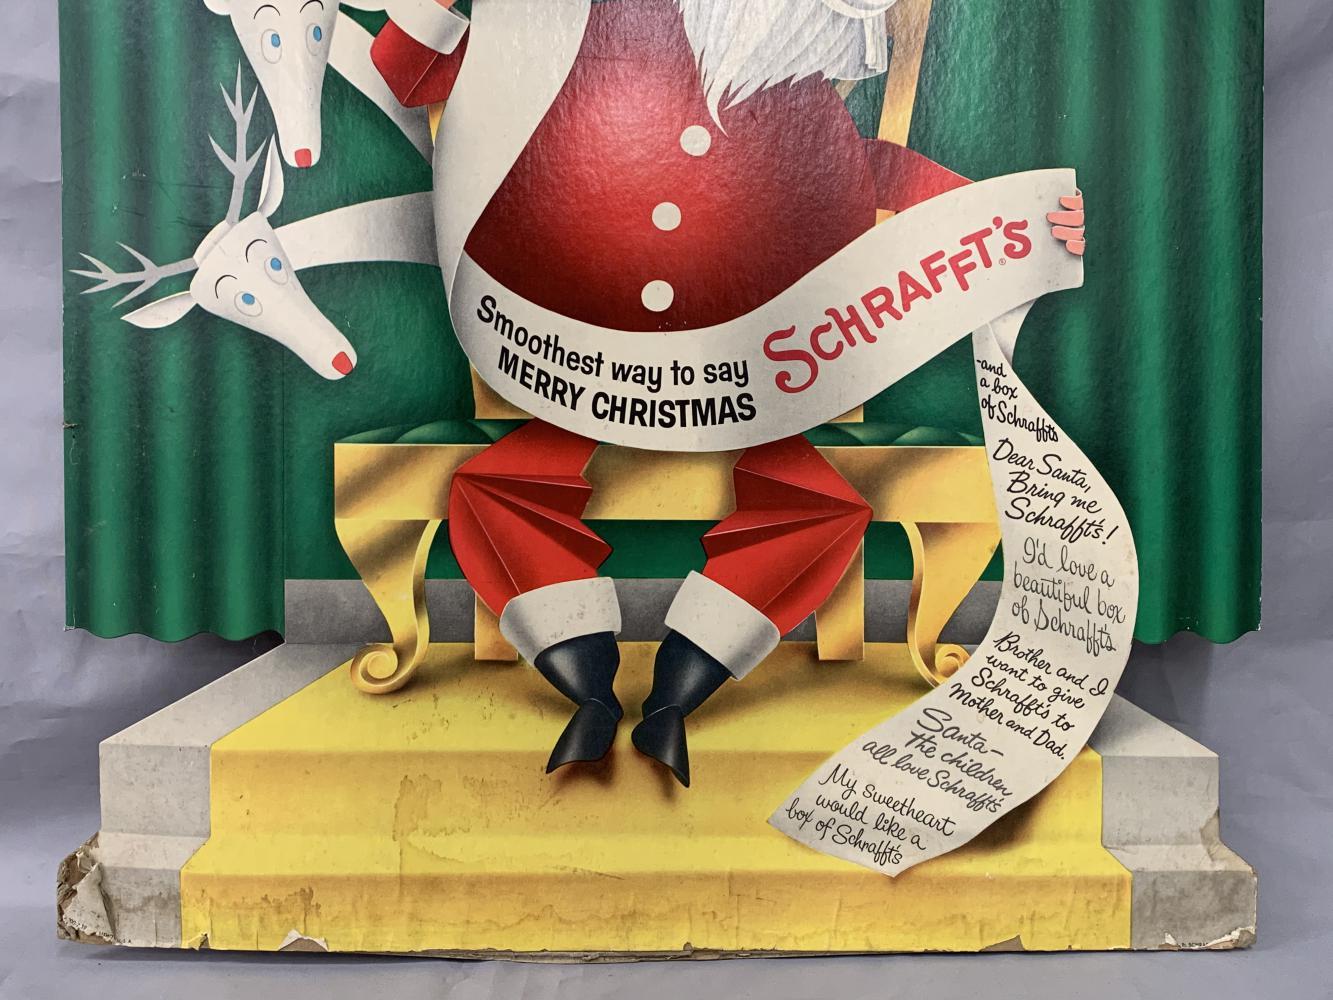 Schrafft's Chocolate Santa Claus Stand-Up Sign